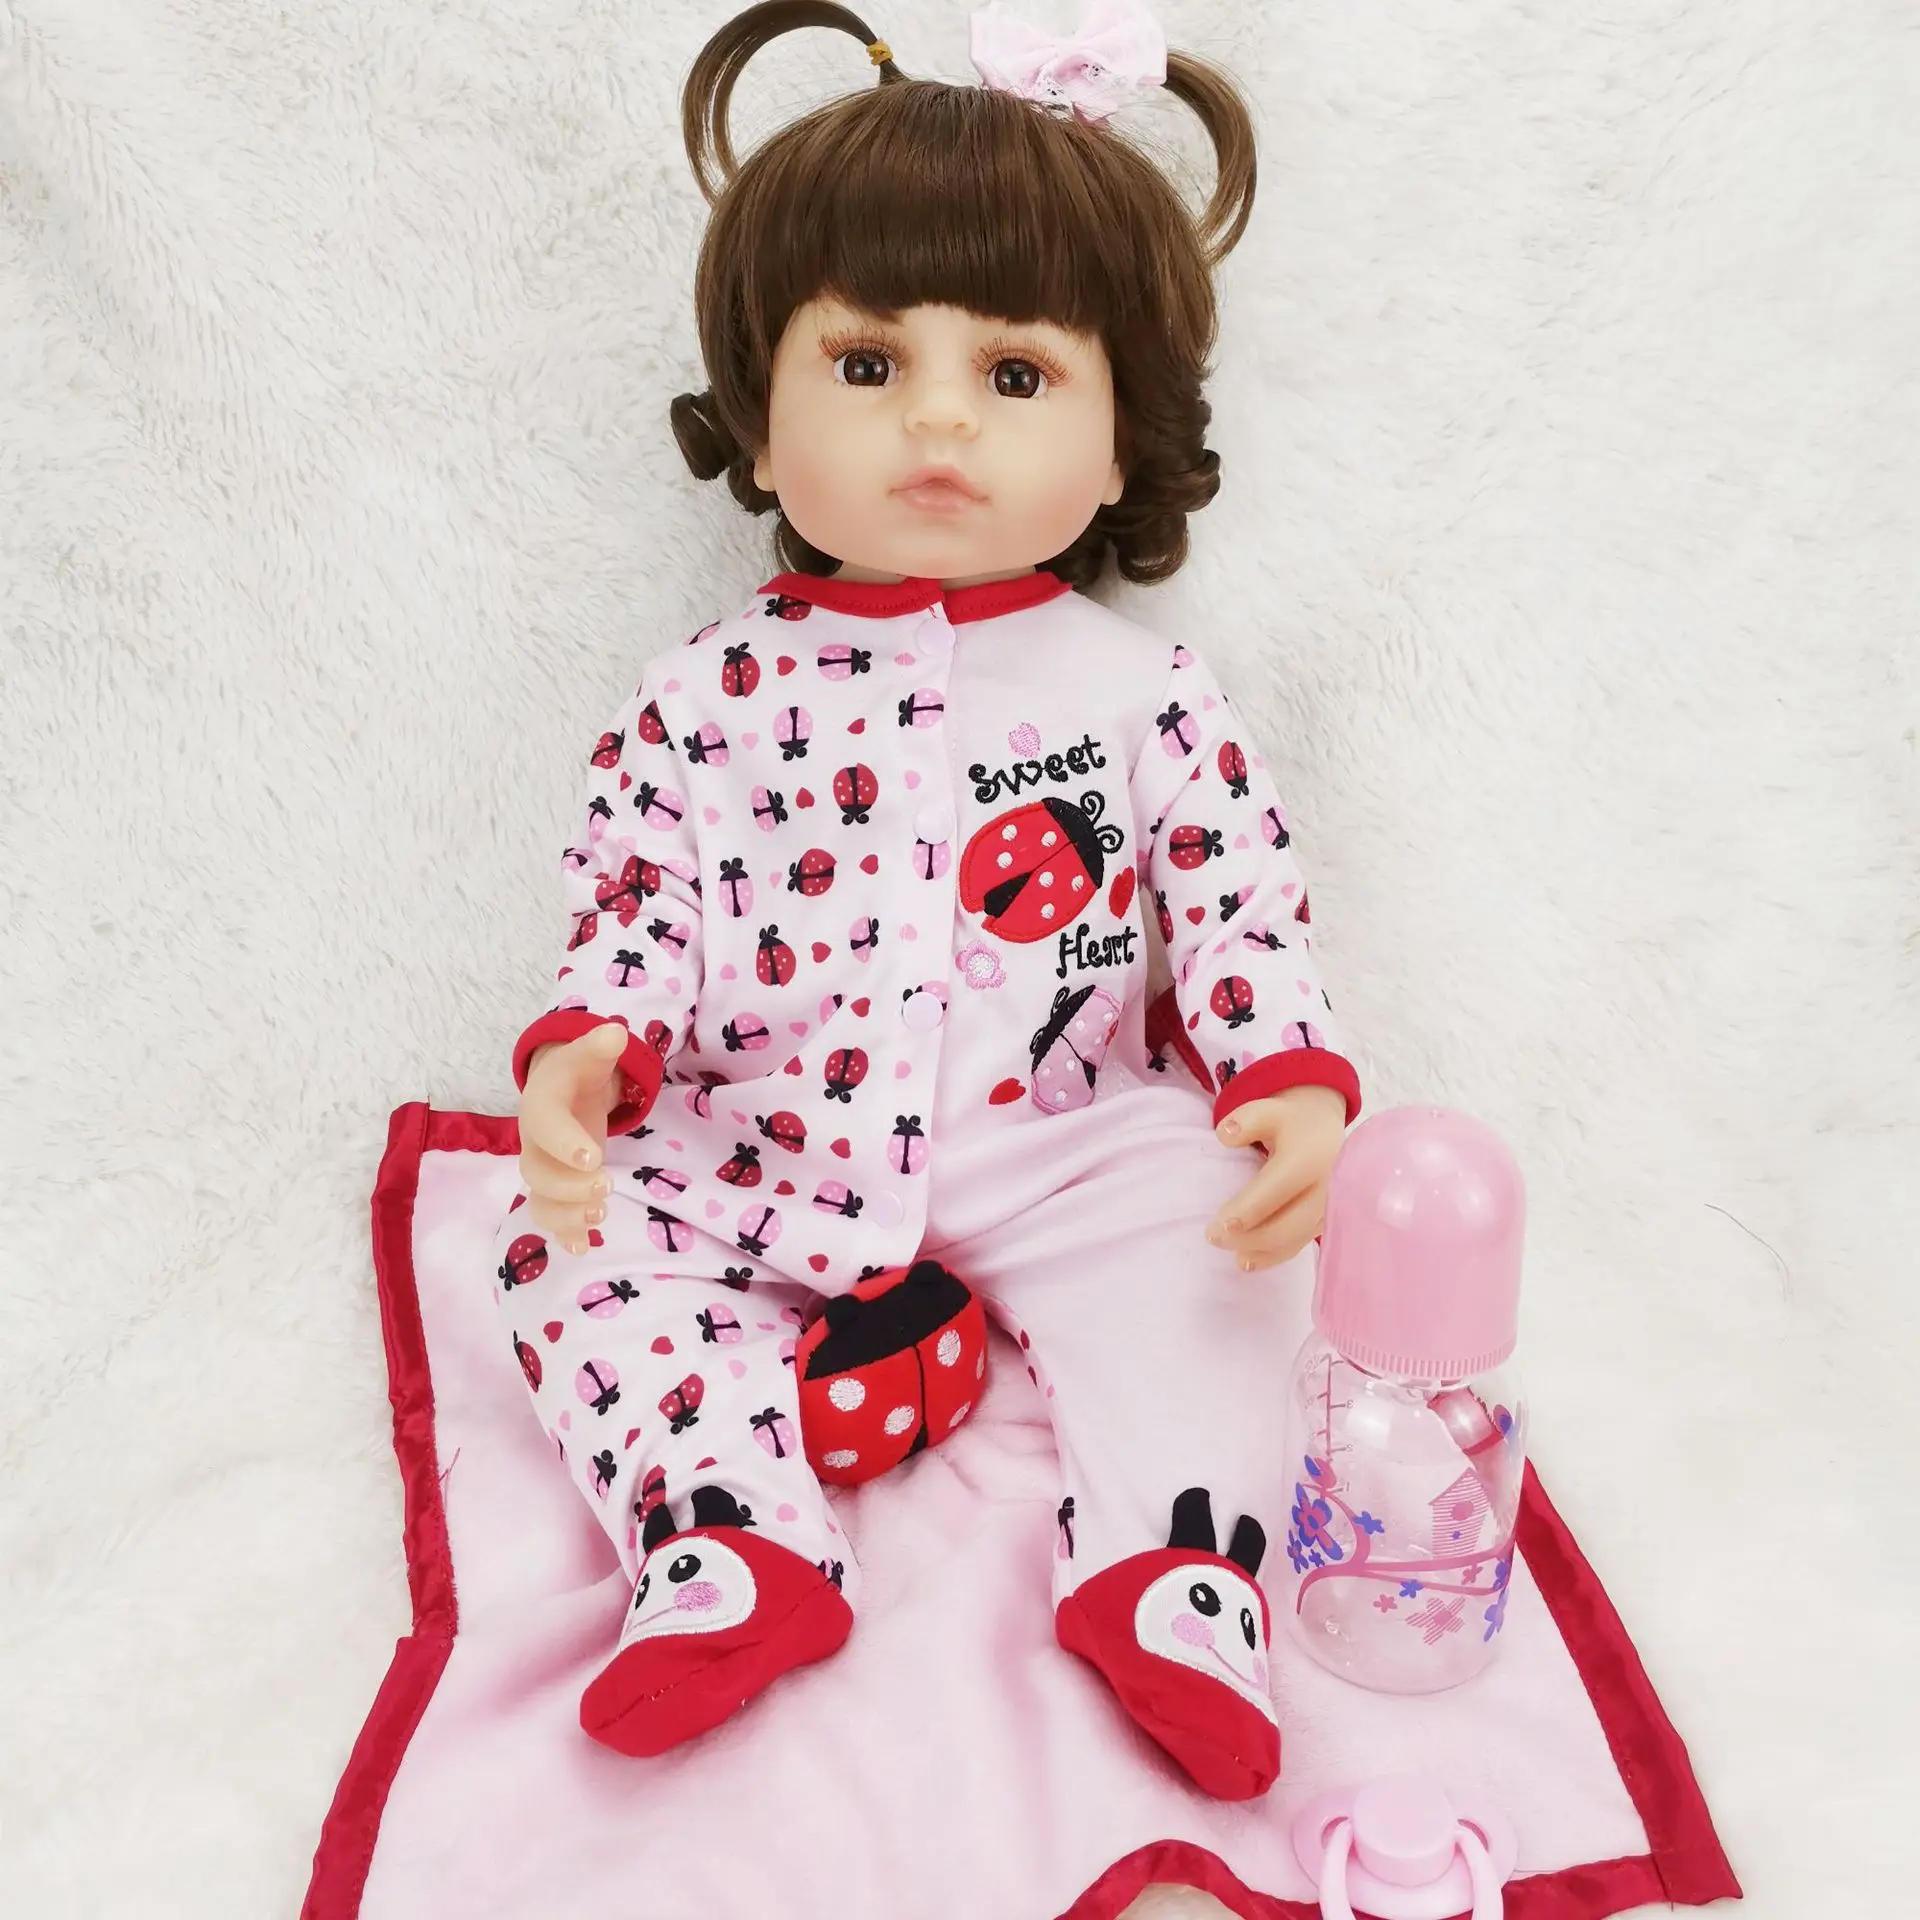 

48cm 55cm Full Silicone Reborn Doll Girl Bebe Curly Hair Baby Lifelike Realistic Alive Gift Bath Toy Children